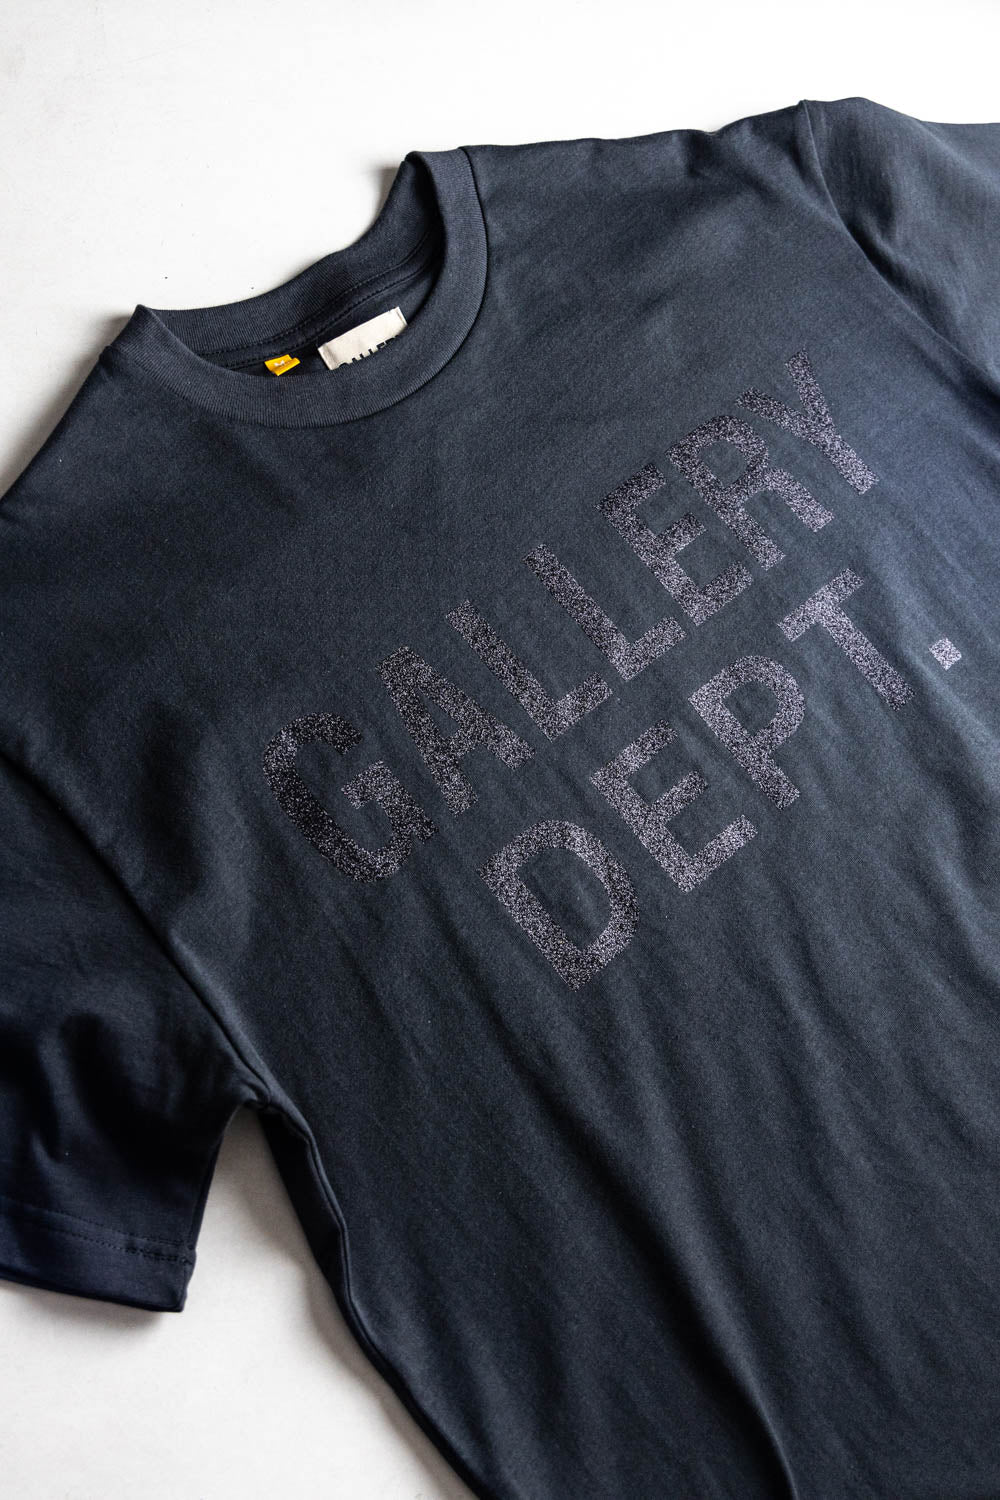 GALLERY DEPT. Logo T Shirt Black